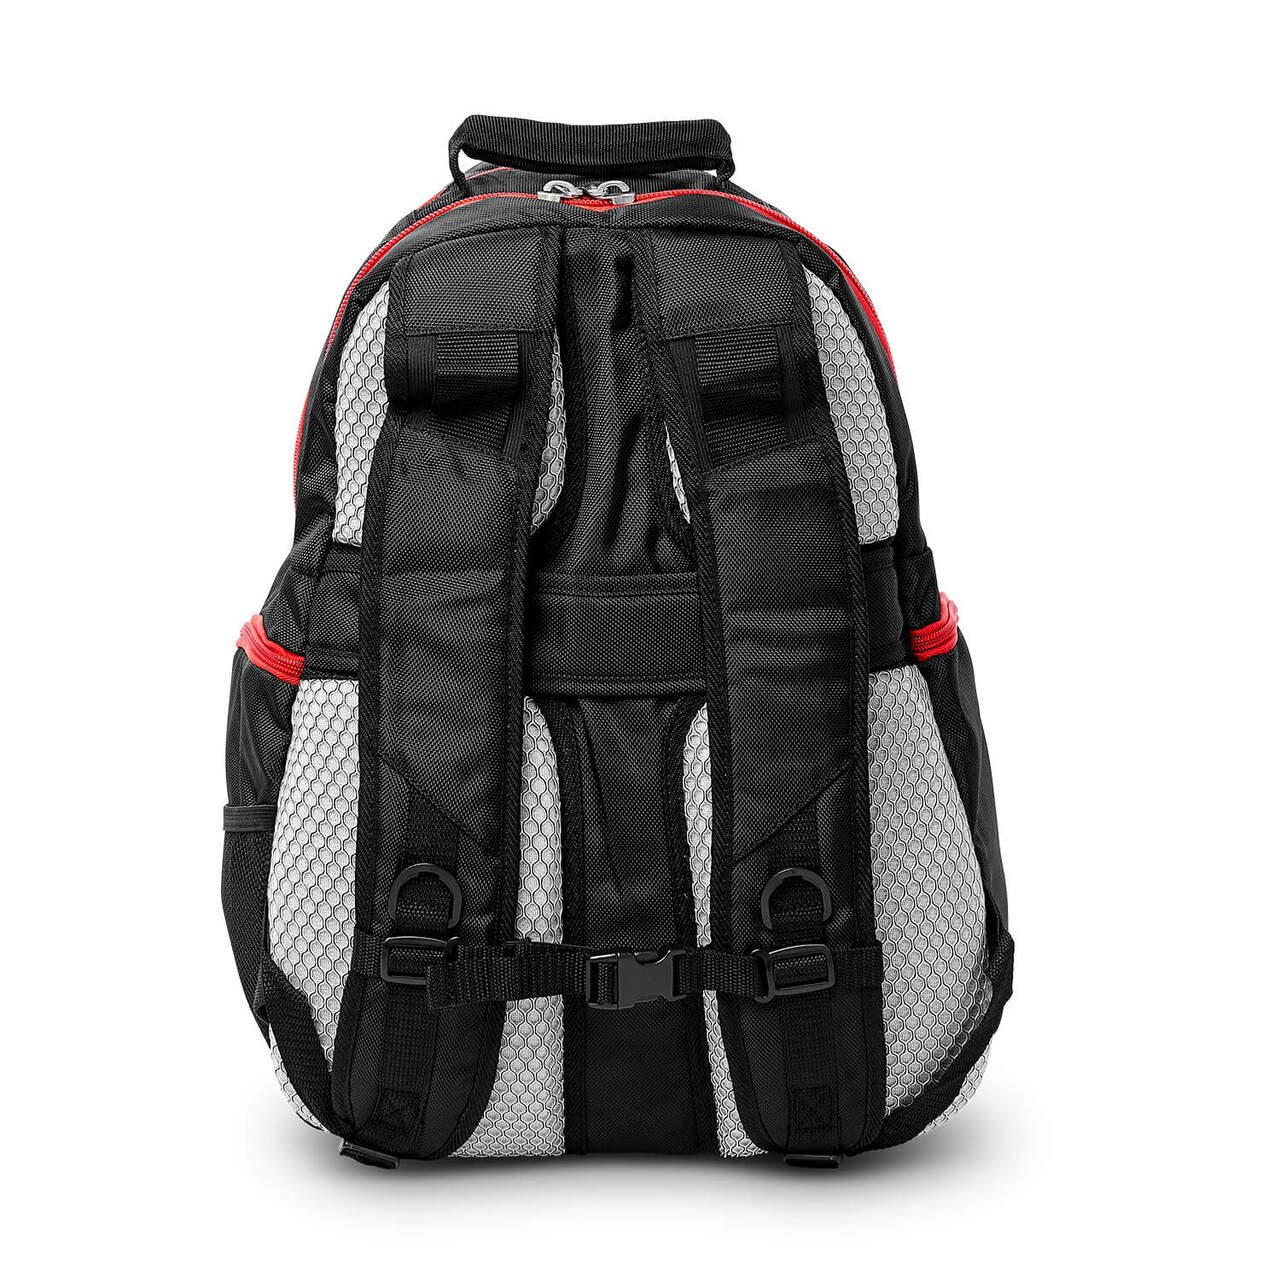 Kansas Backpack | Kansas Jayhawks Laptop Backpack